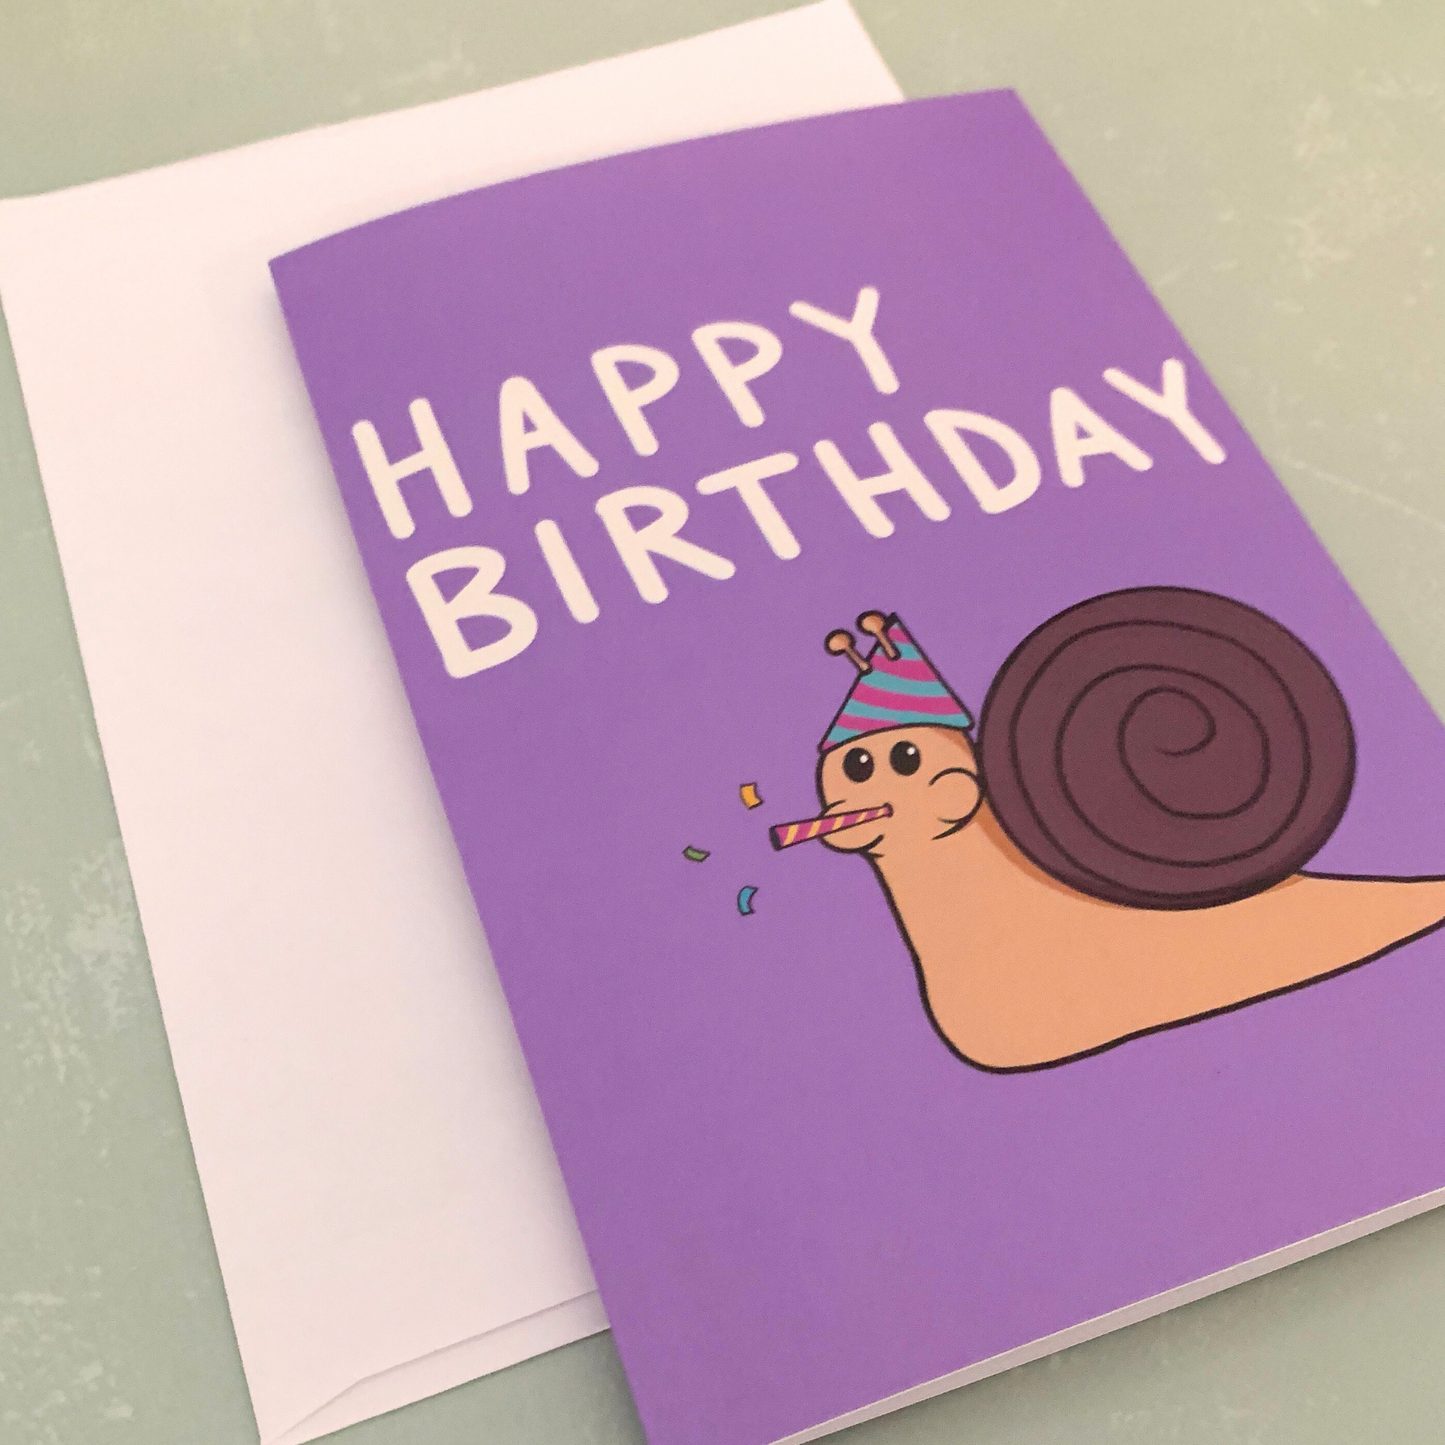 Todd the Snail Birthday Card